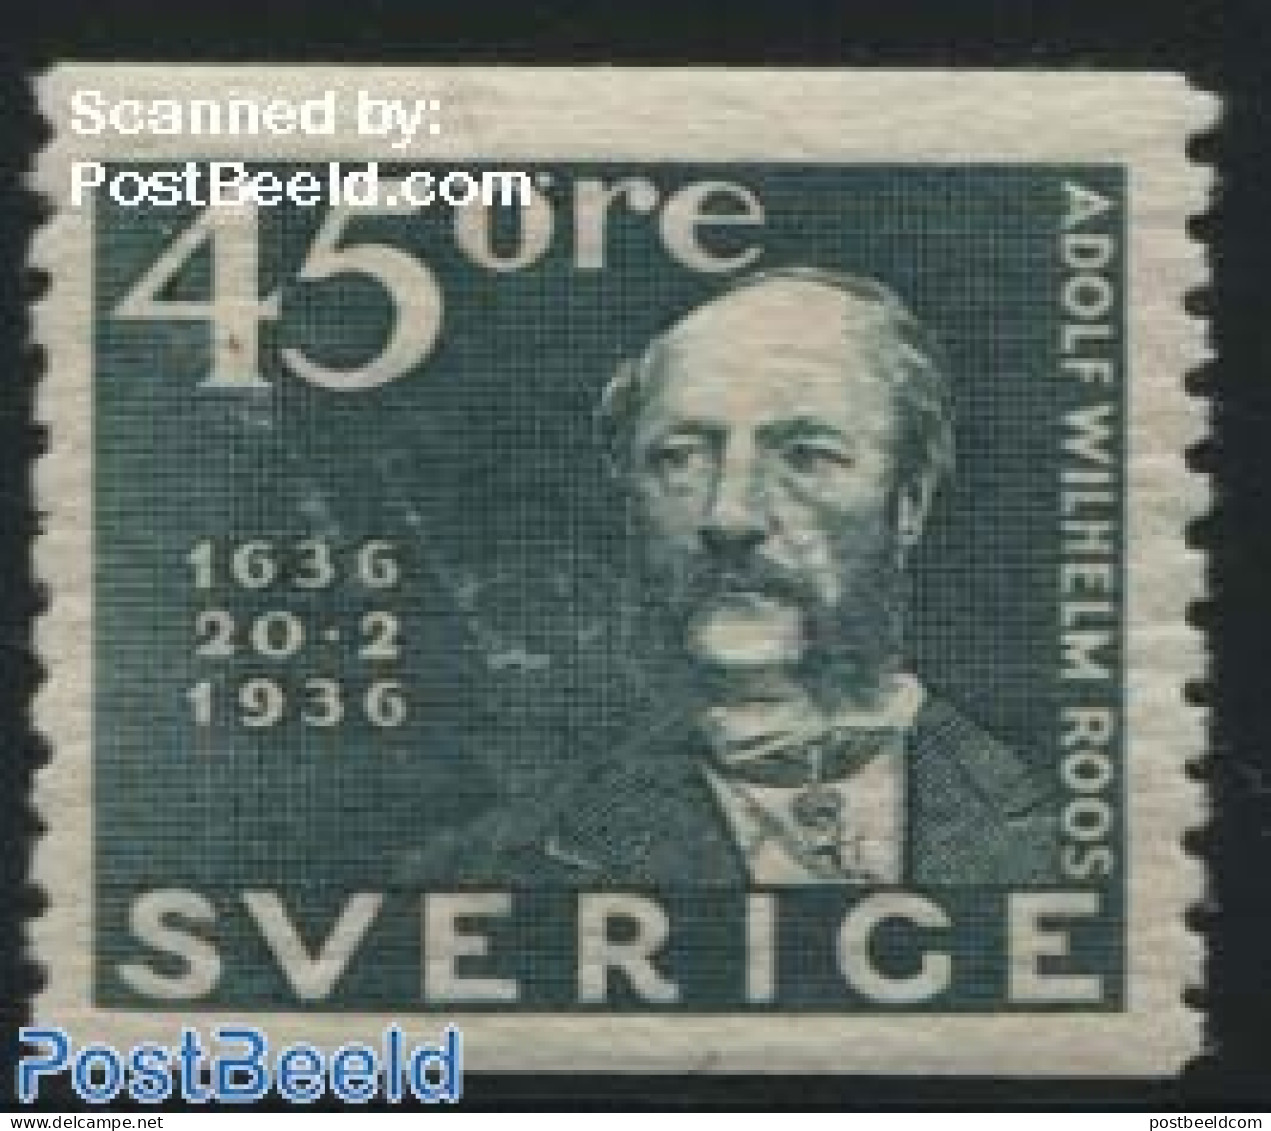 Sweden 1936 45o, Stamp Out Of Set, Unused (hinged) - Ongebruikt